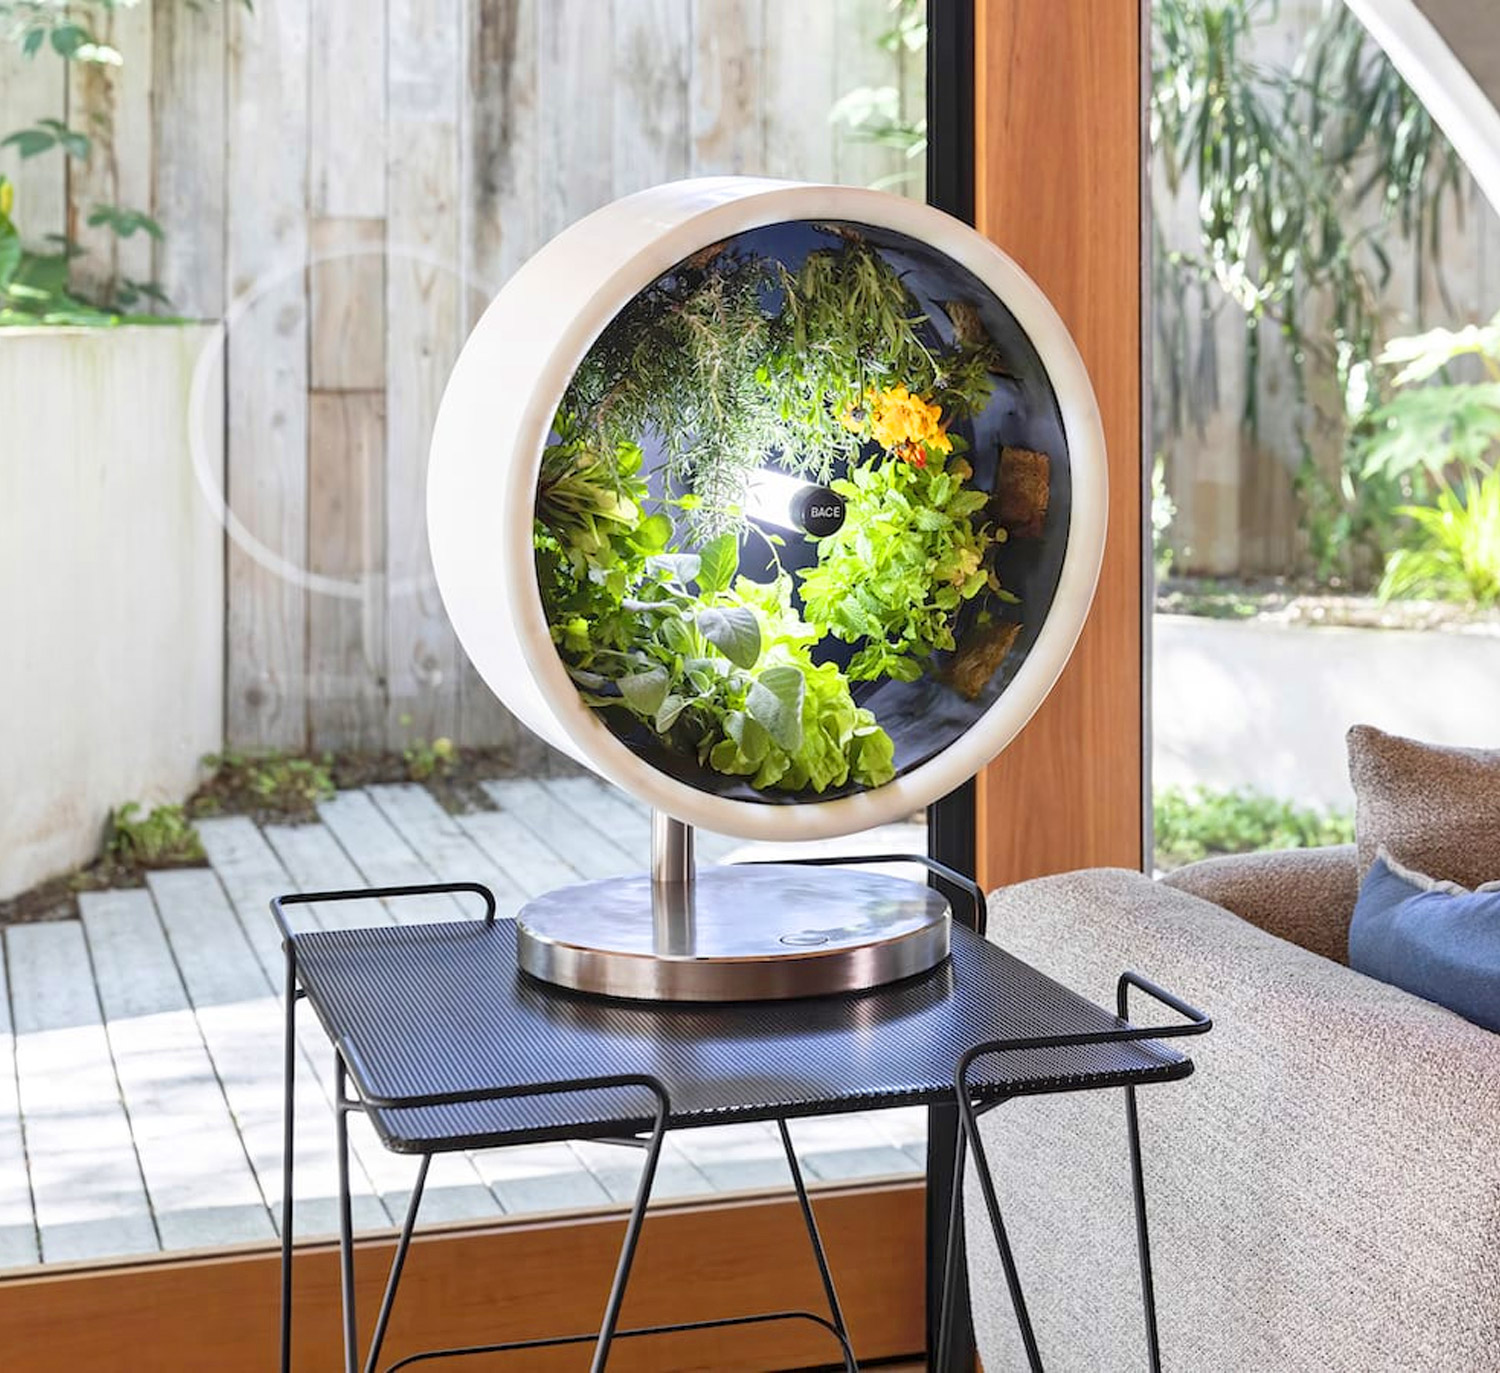 Incredible Rotating Nasa Inspired Indoor Garden Provides Full